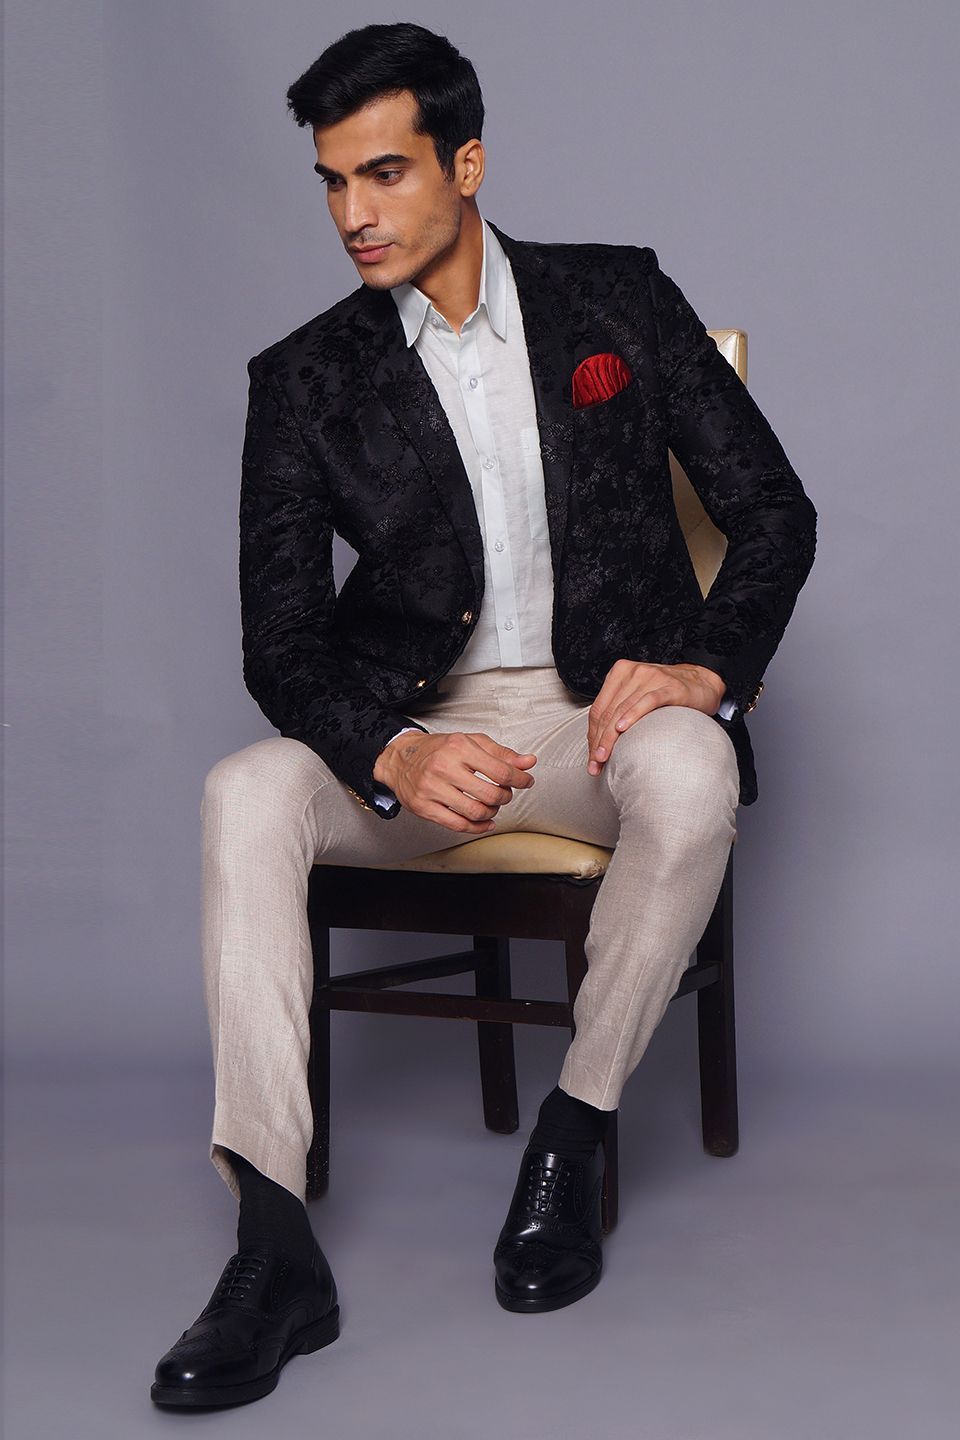 Mens Genuine Suede Blazer Style Jacket Leather Mens Classic VIntage Smart  Casual Grey: Buy Online - Happy Gentleman United States